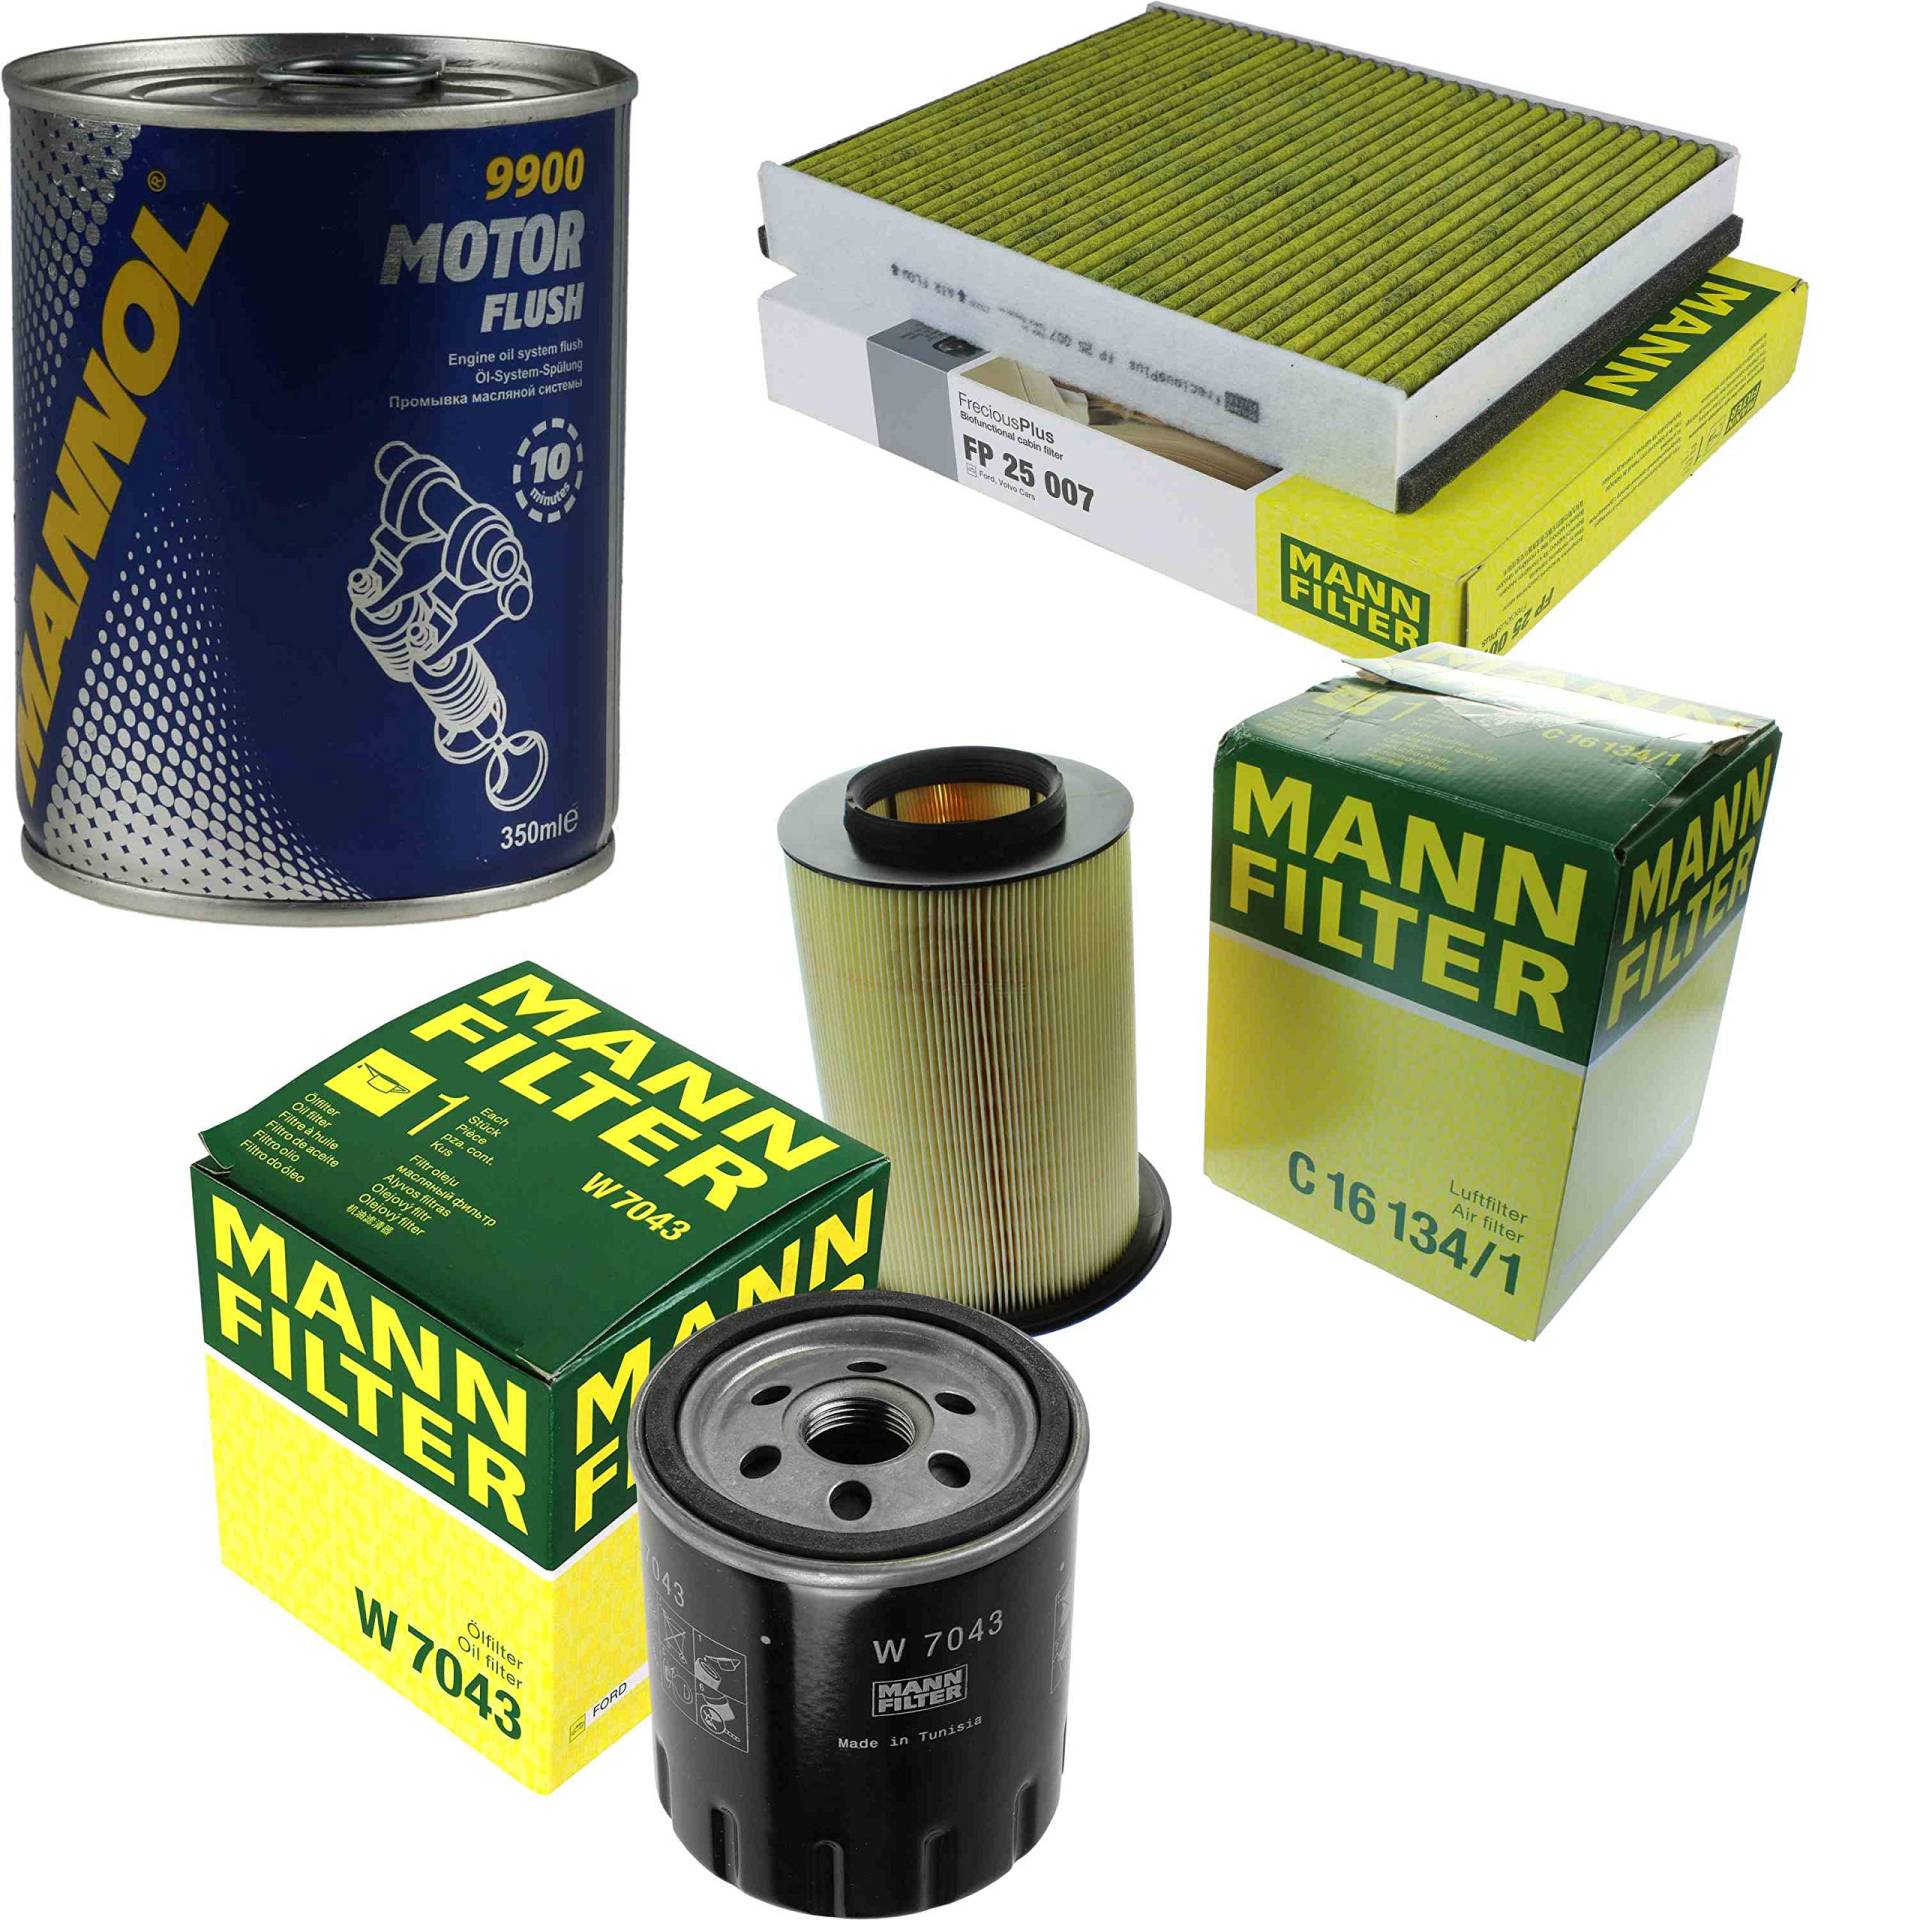 QR-Parts Set 85496443 FP 25 007 9900 W 7043 C 16 134/1 Original MANN-Filter Inspektionspaket SCT Motor Flush Motorspülung 11588701 von QR-PARTS